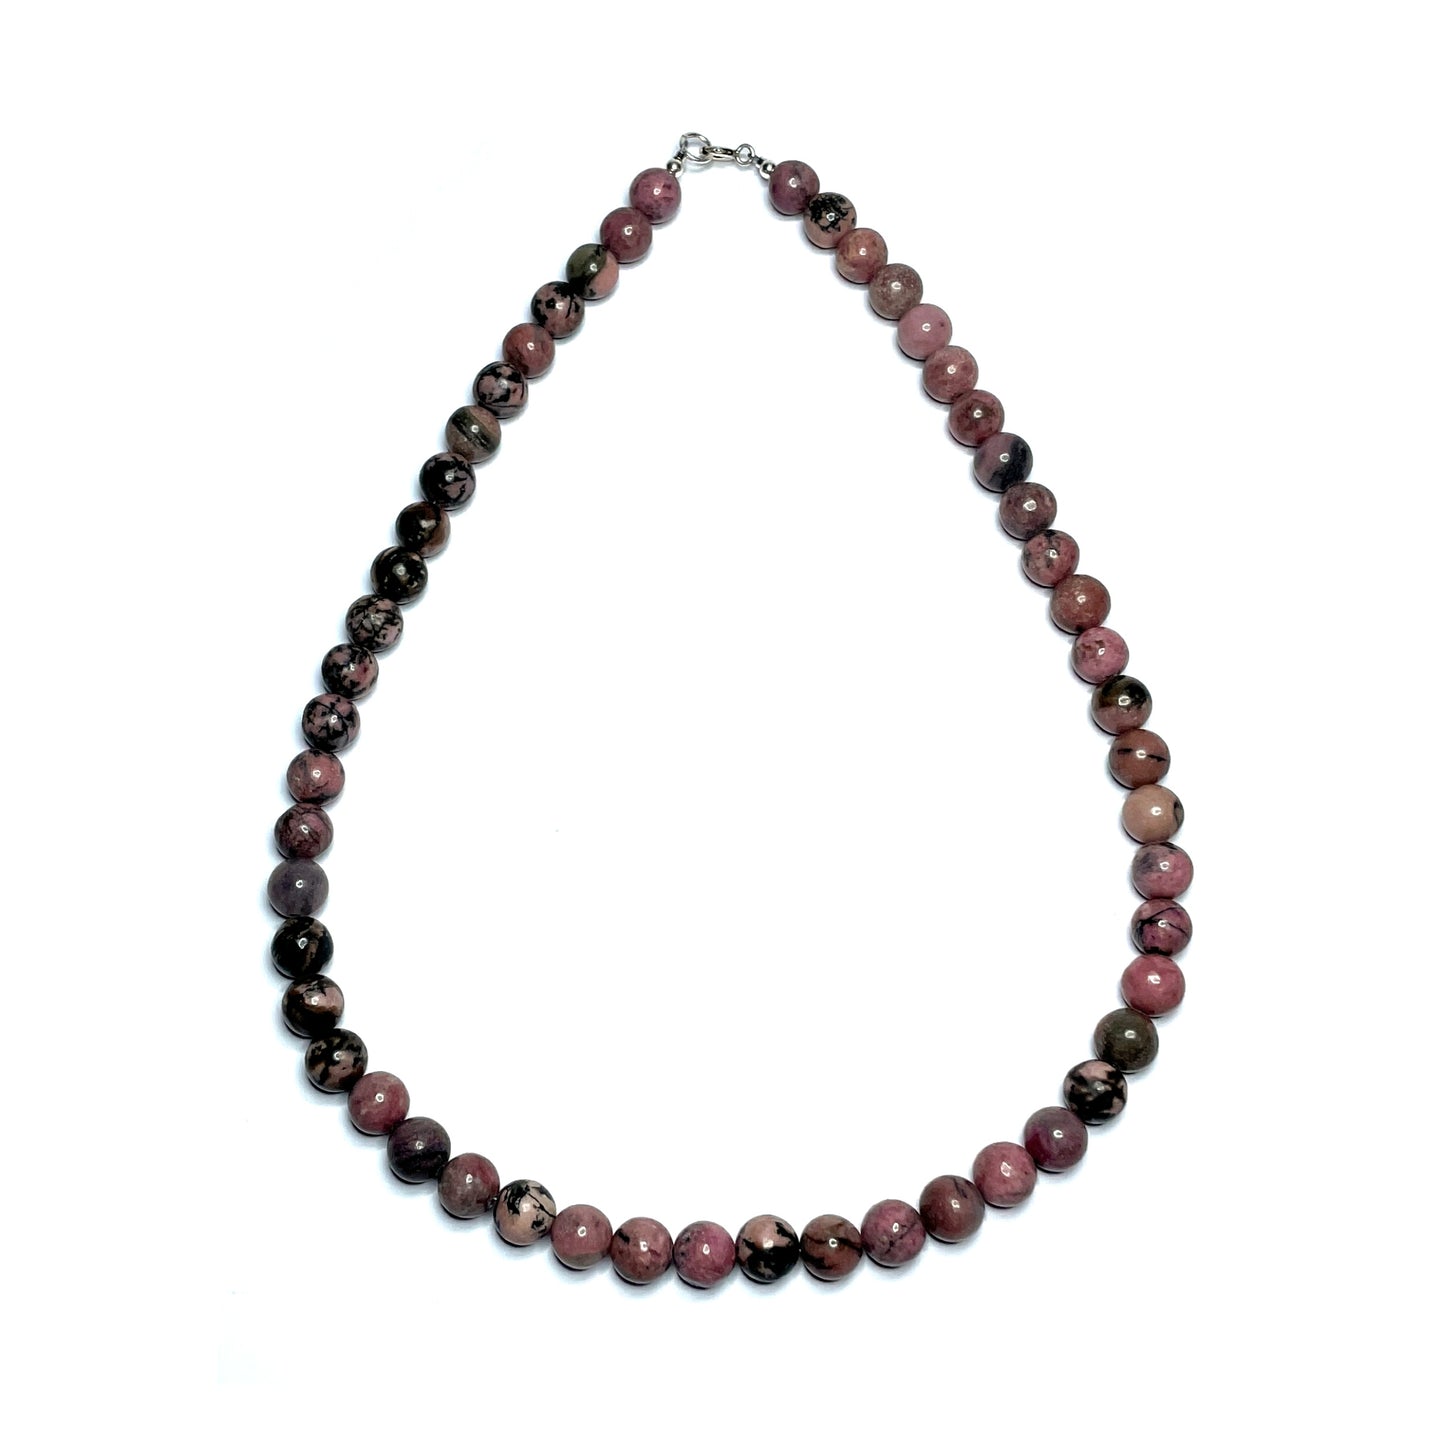 Rhodonite gemstone necklace